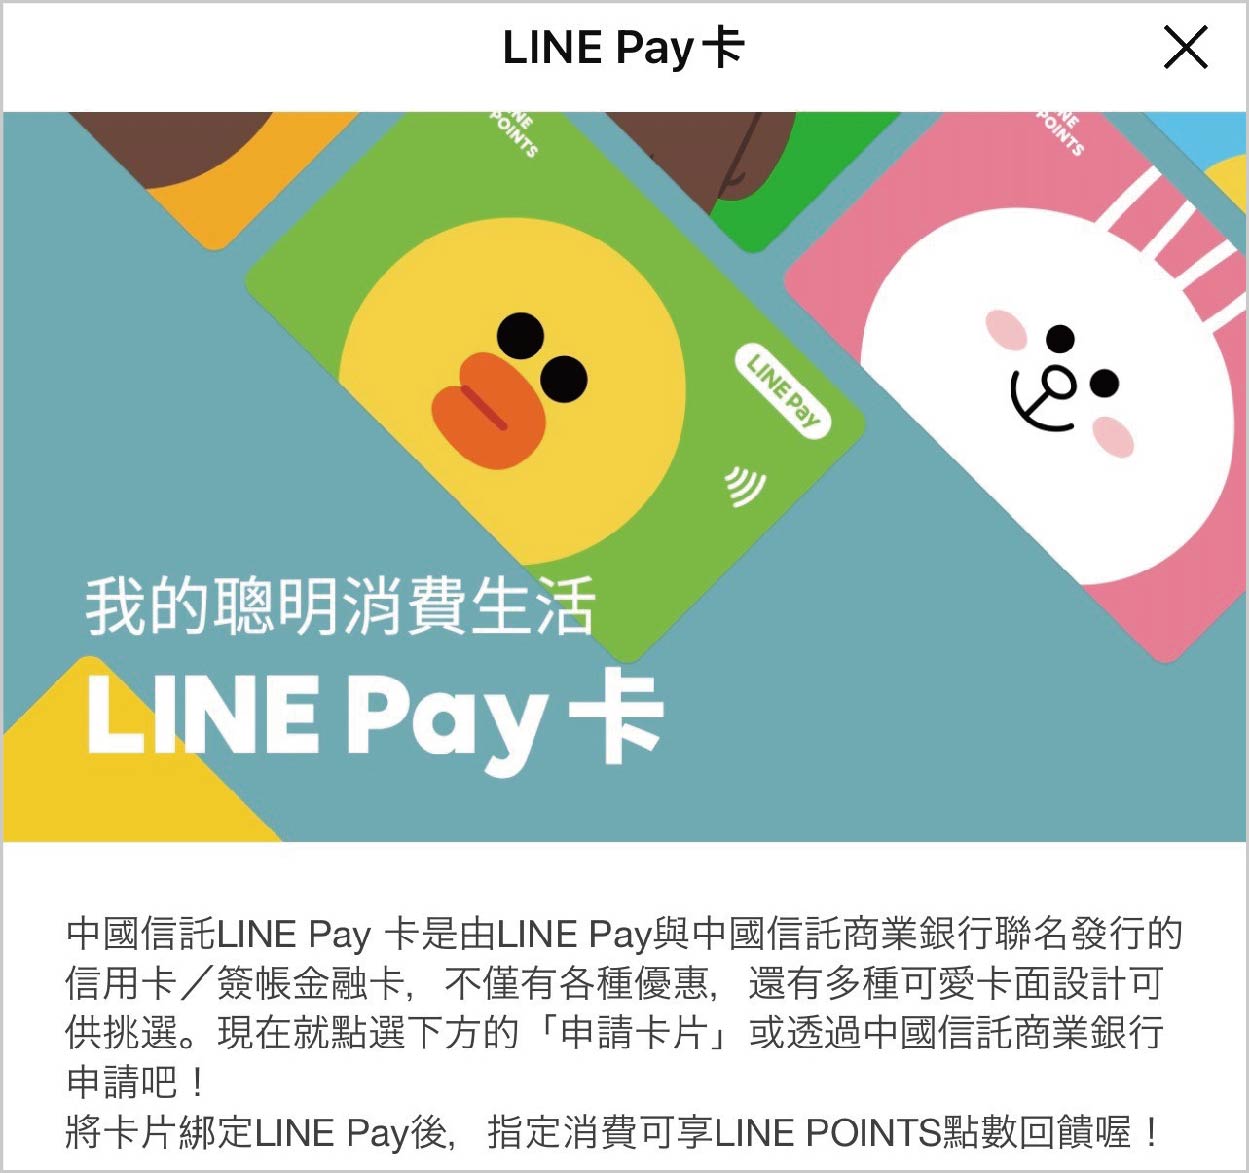 LINE Pay綁定指定信用卡或金融卡支付，都可以獲得LINE POINTS回饋